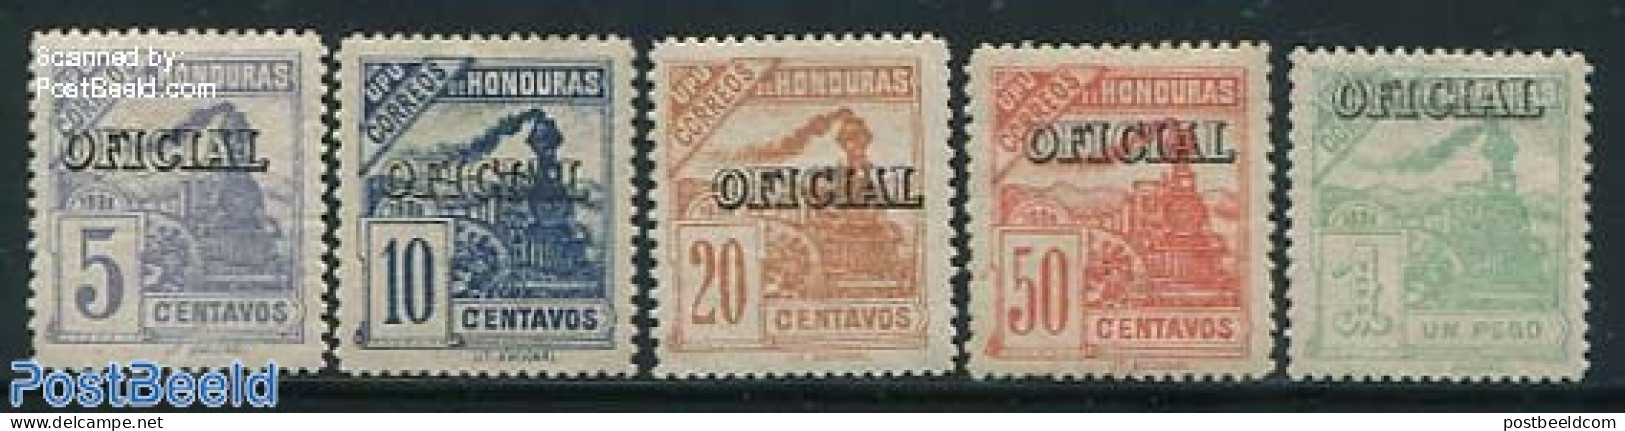 Honduras 1898 OFICIAL Overprints 5v, Mint NH, Transport - Railways - Treinen